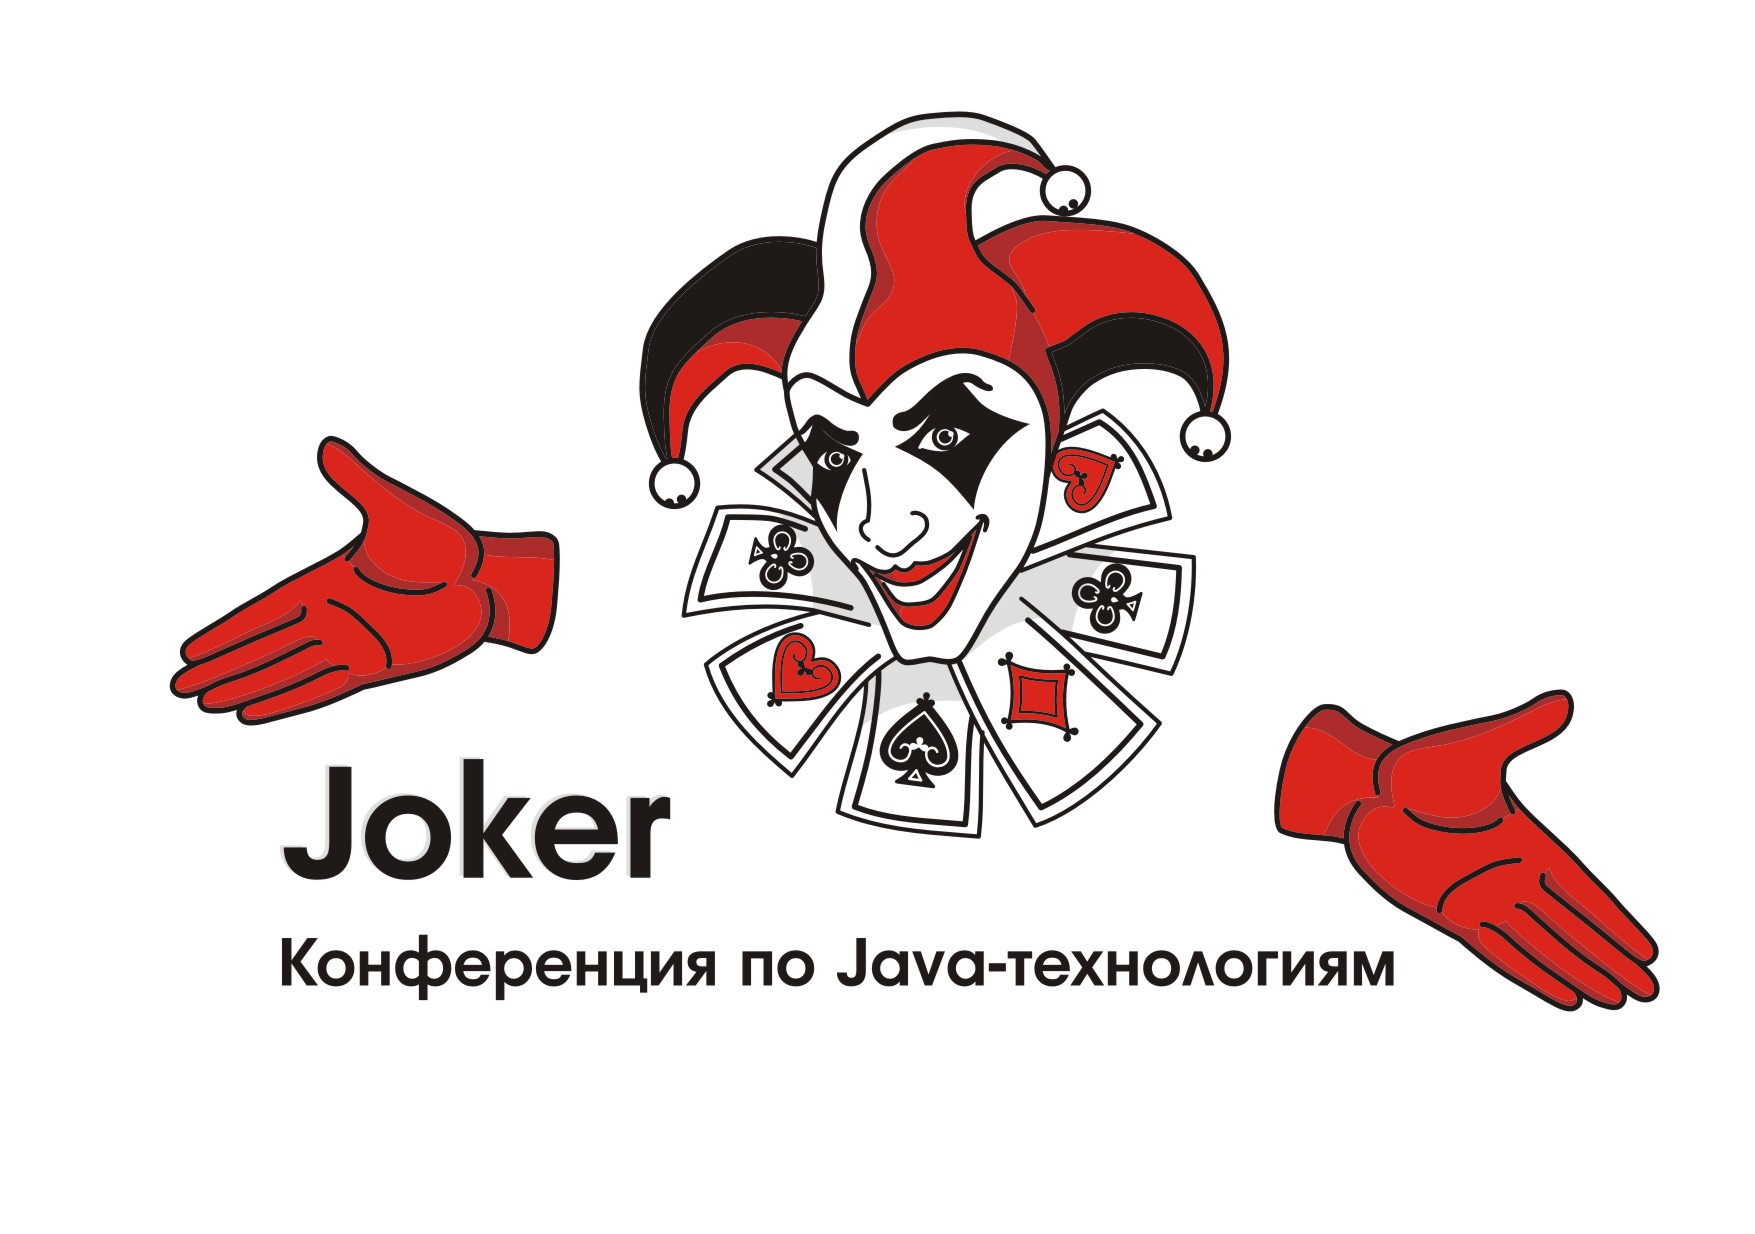 Joker 2013, конференция по Java-технологиям, которая прошла 15 октября 2014...